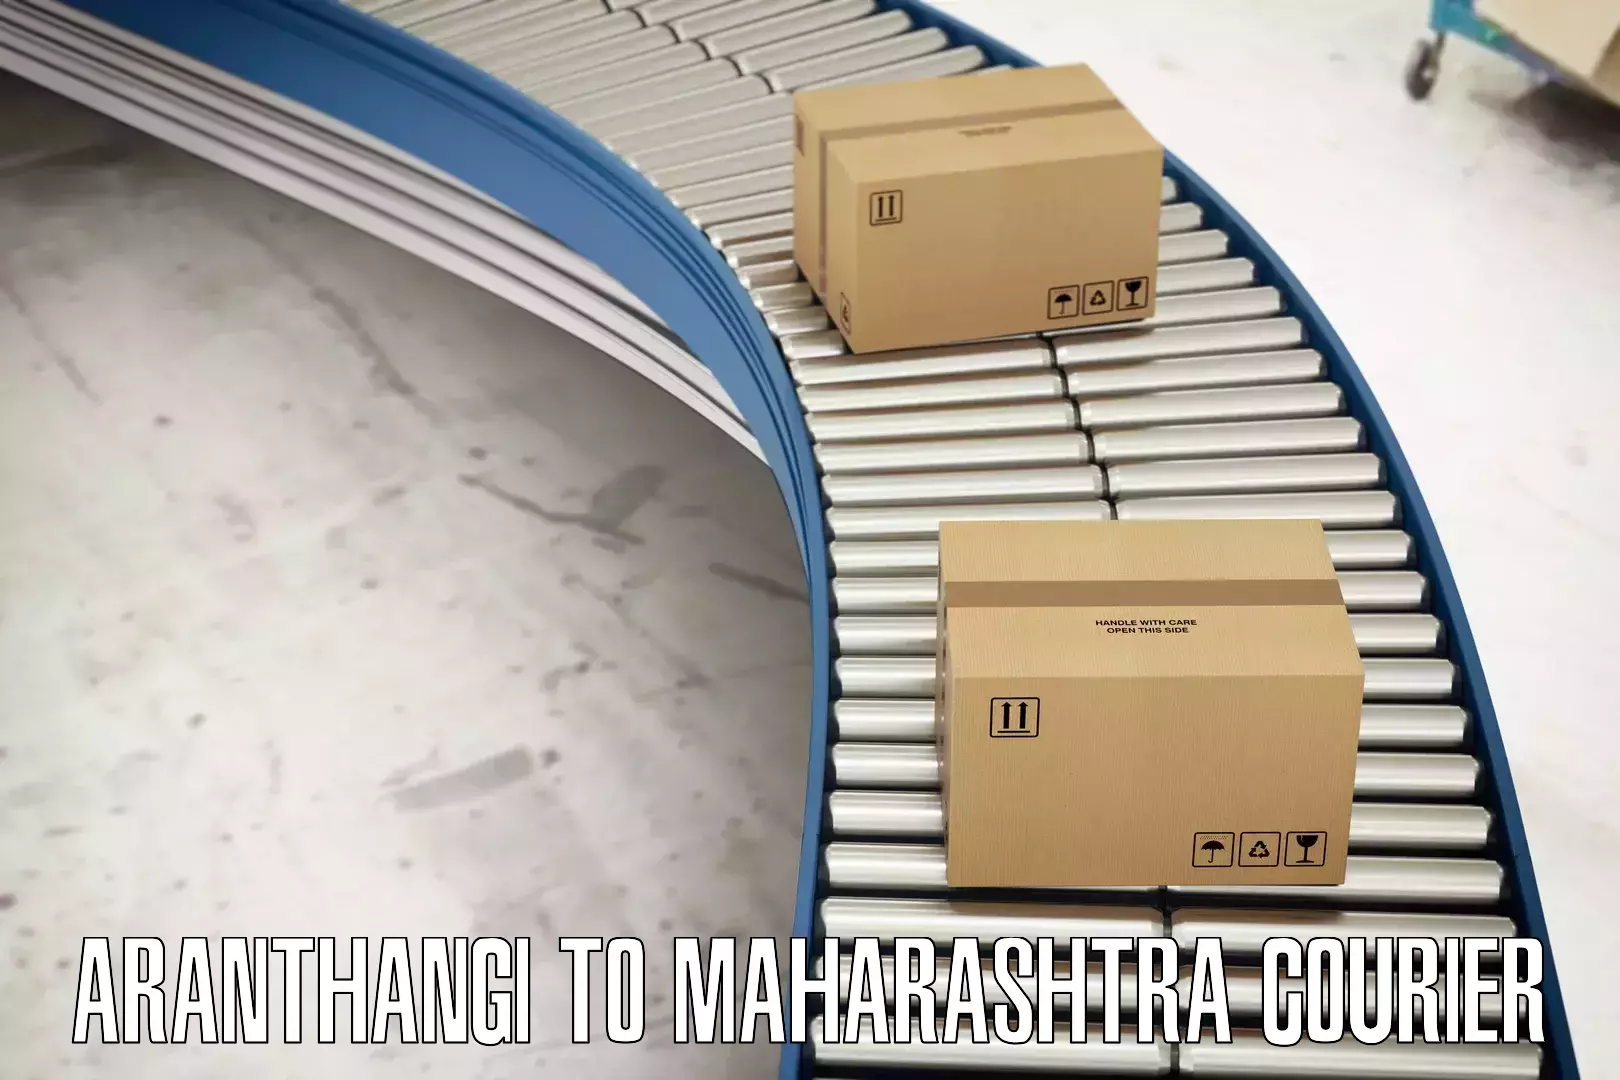 Sustainable delivery practices Aranthangi to Maharashtra